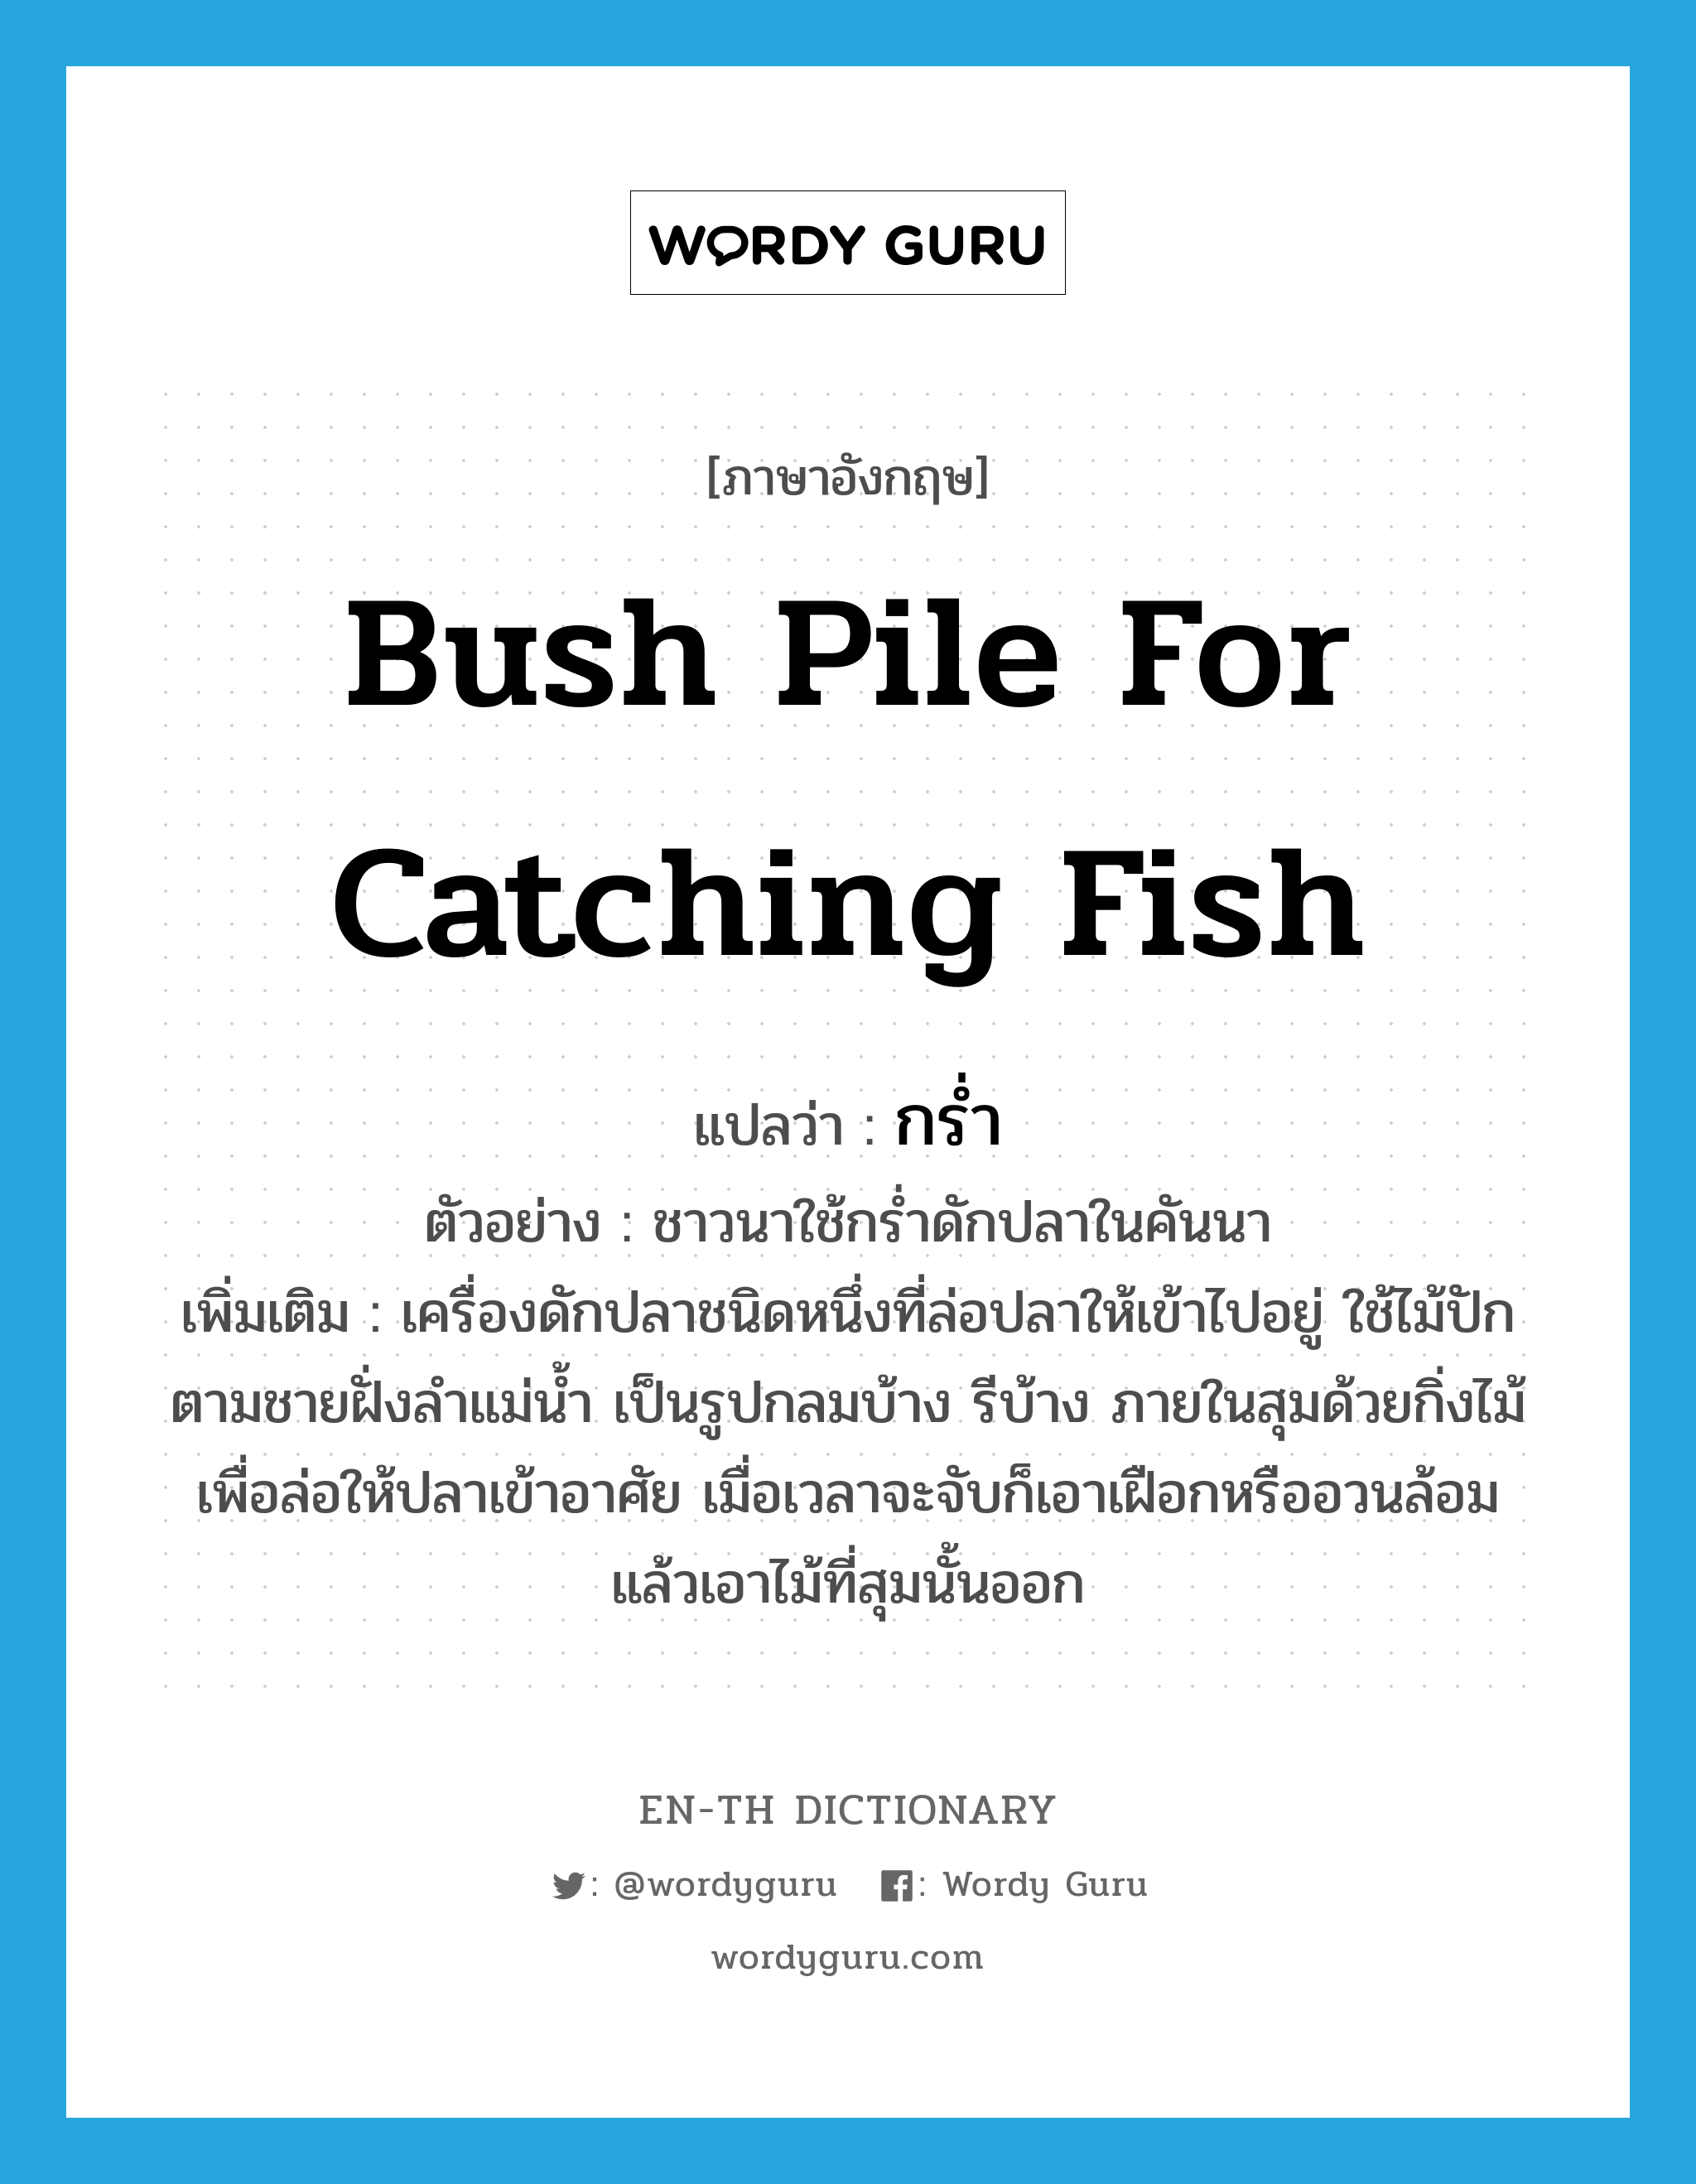 bush pile for catching fish แปลว่า?, คำศัพท์ภาษาอังกฤษ bush pile for catching fish แปลว่า กร่ำ ประเภท N ตัวอย่าง ชาวนาใช้กร่ำดักปลาในคันนา เพิ่มเติม เครื่องดักปลาชนิดหนึ่งที่ล่อปลาให้เข้าไปอยู่ ใช้ไม้ปักตามชายฝั่งลำแม่น้ำ เป็นรูปกลมบ้าง รีบ้าง ภายในสุมด้วยกิ่งไม้เพื่อล่อให้ปลาเข้าอาศัย เมื่อเวลาจะจับก็เอาเฝือกหรืออวนล้อม แล้วเอาไม้ที่สุมนั้นออก หมวด N